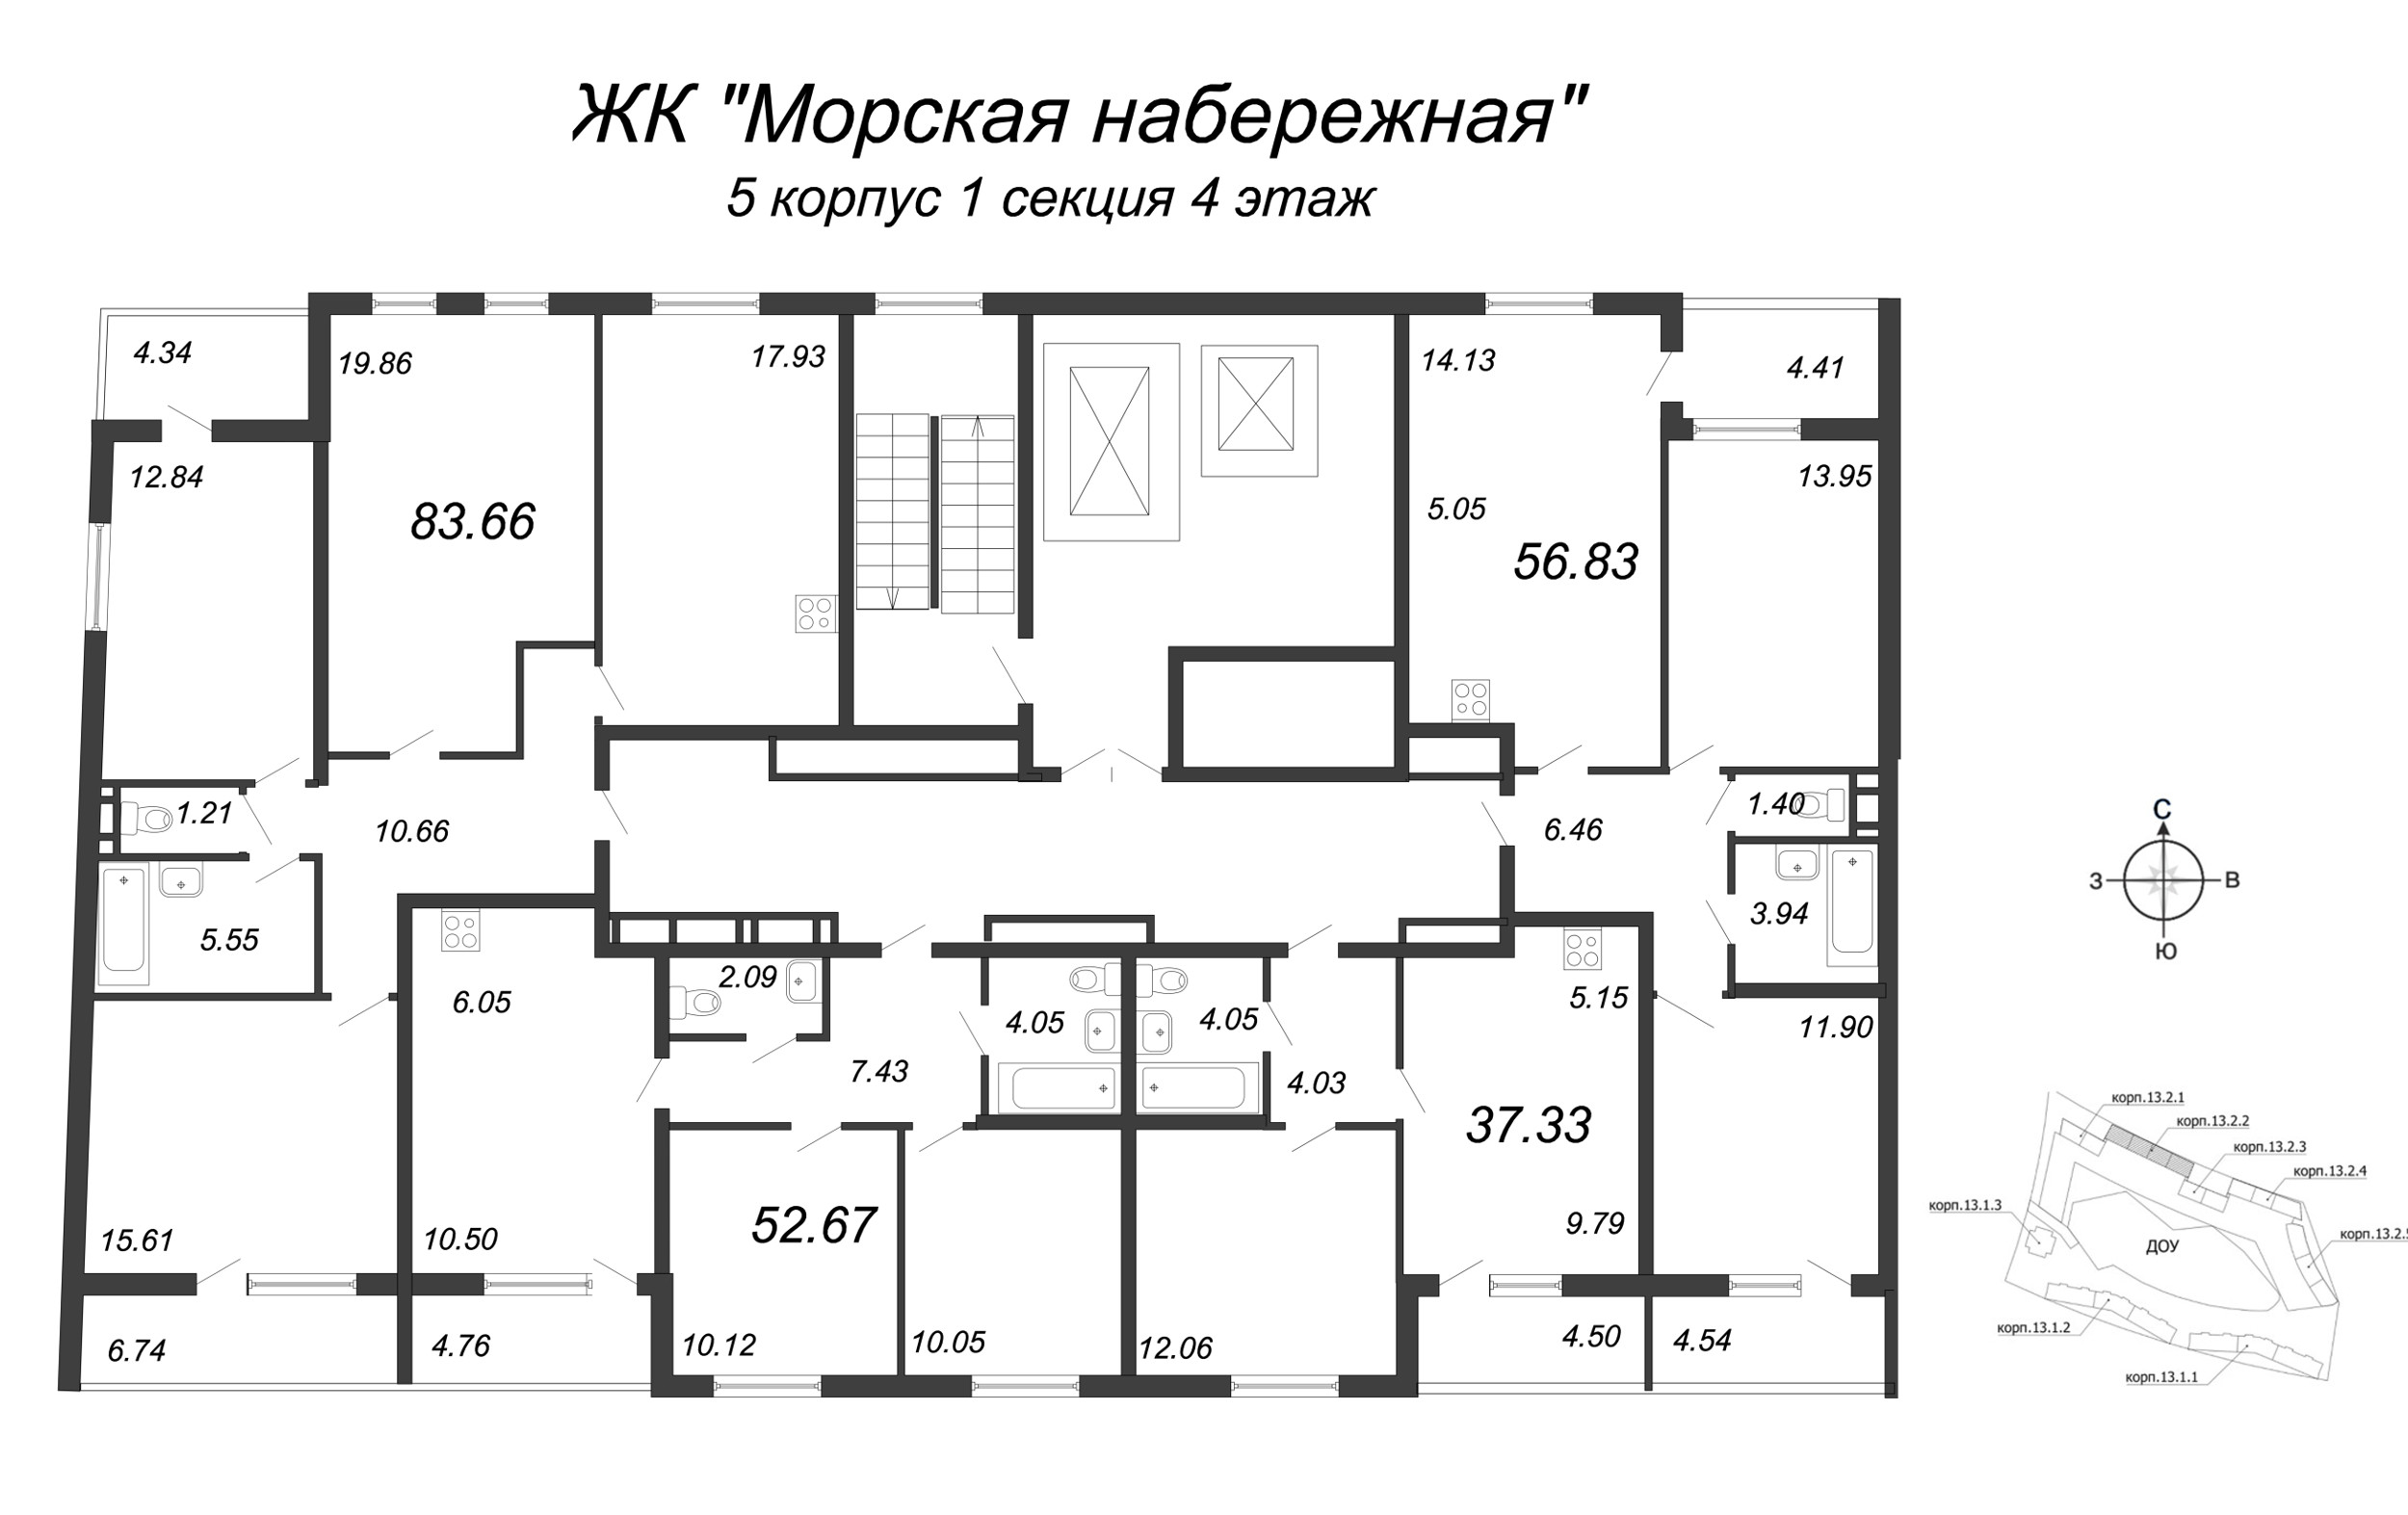 4-комнатная (Евро) квартира, 87.6 м² - планировка этажа